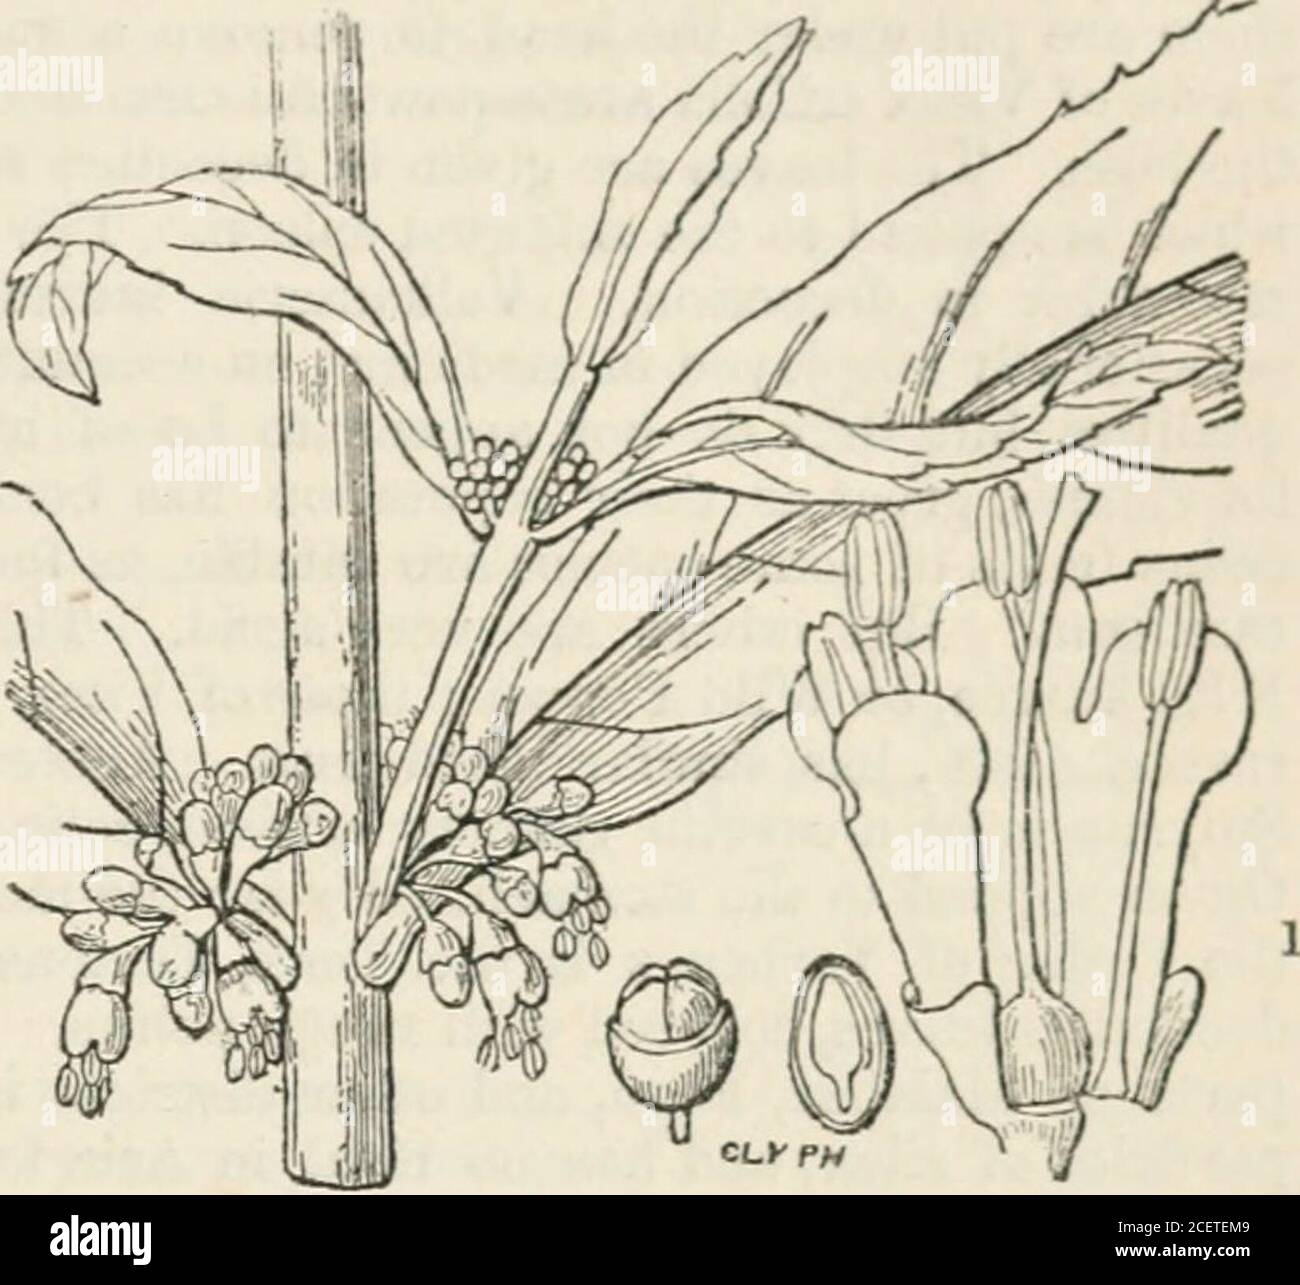 . The vegetable kingdom : or, The structure, classification, and uses of plants, illustrated upon the natural system. udodictamnus,Mon Acanthoprasium, Bth.Lasiocorys, Benth.Roylea, Wall.Otostegia, Benth.Leucas, R. Br. Hemistoma, Ehrenb.Leonotis, Pers. Leonurus, Tournef.Phlomis, Linn. Phlomoides, Monch. Phlomidopsis, Link.Notochaete, Benth.Eremostachys, Bung.Eriophyton, Benth.Moluccella, Linn. Molucca, Tournef. Chasmone, Presl.Hj-menocrater, F. et M.Holmskioldia, Retz. Hastingia, Smith. Platuniiim, Juss. Achyrospennum, Blum. Siphotoxys, Boj. Lamprostachys, Boj.Colquhounia, Wall.Sestinia, Boiss. Stock Photo